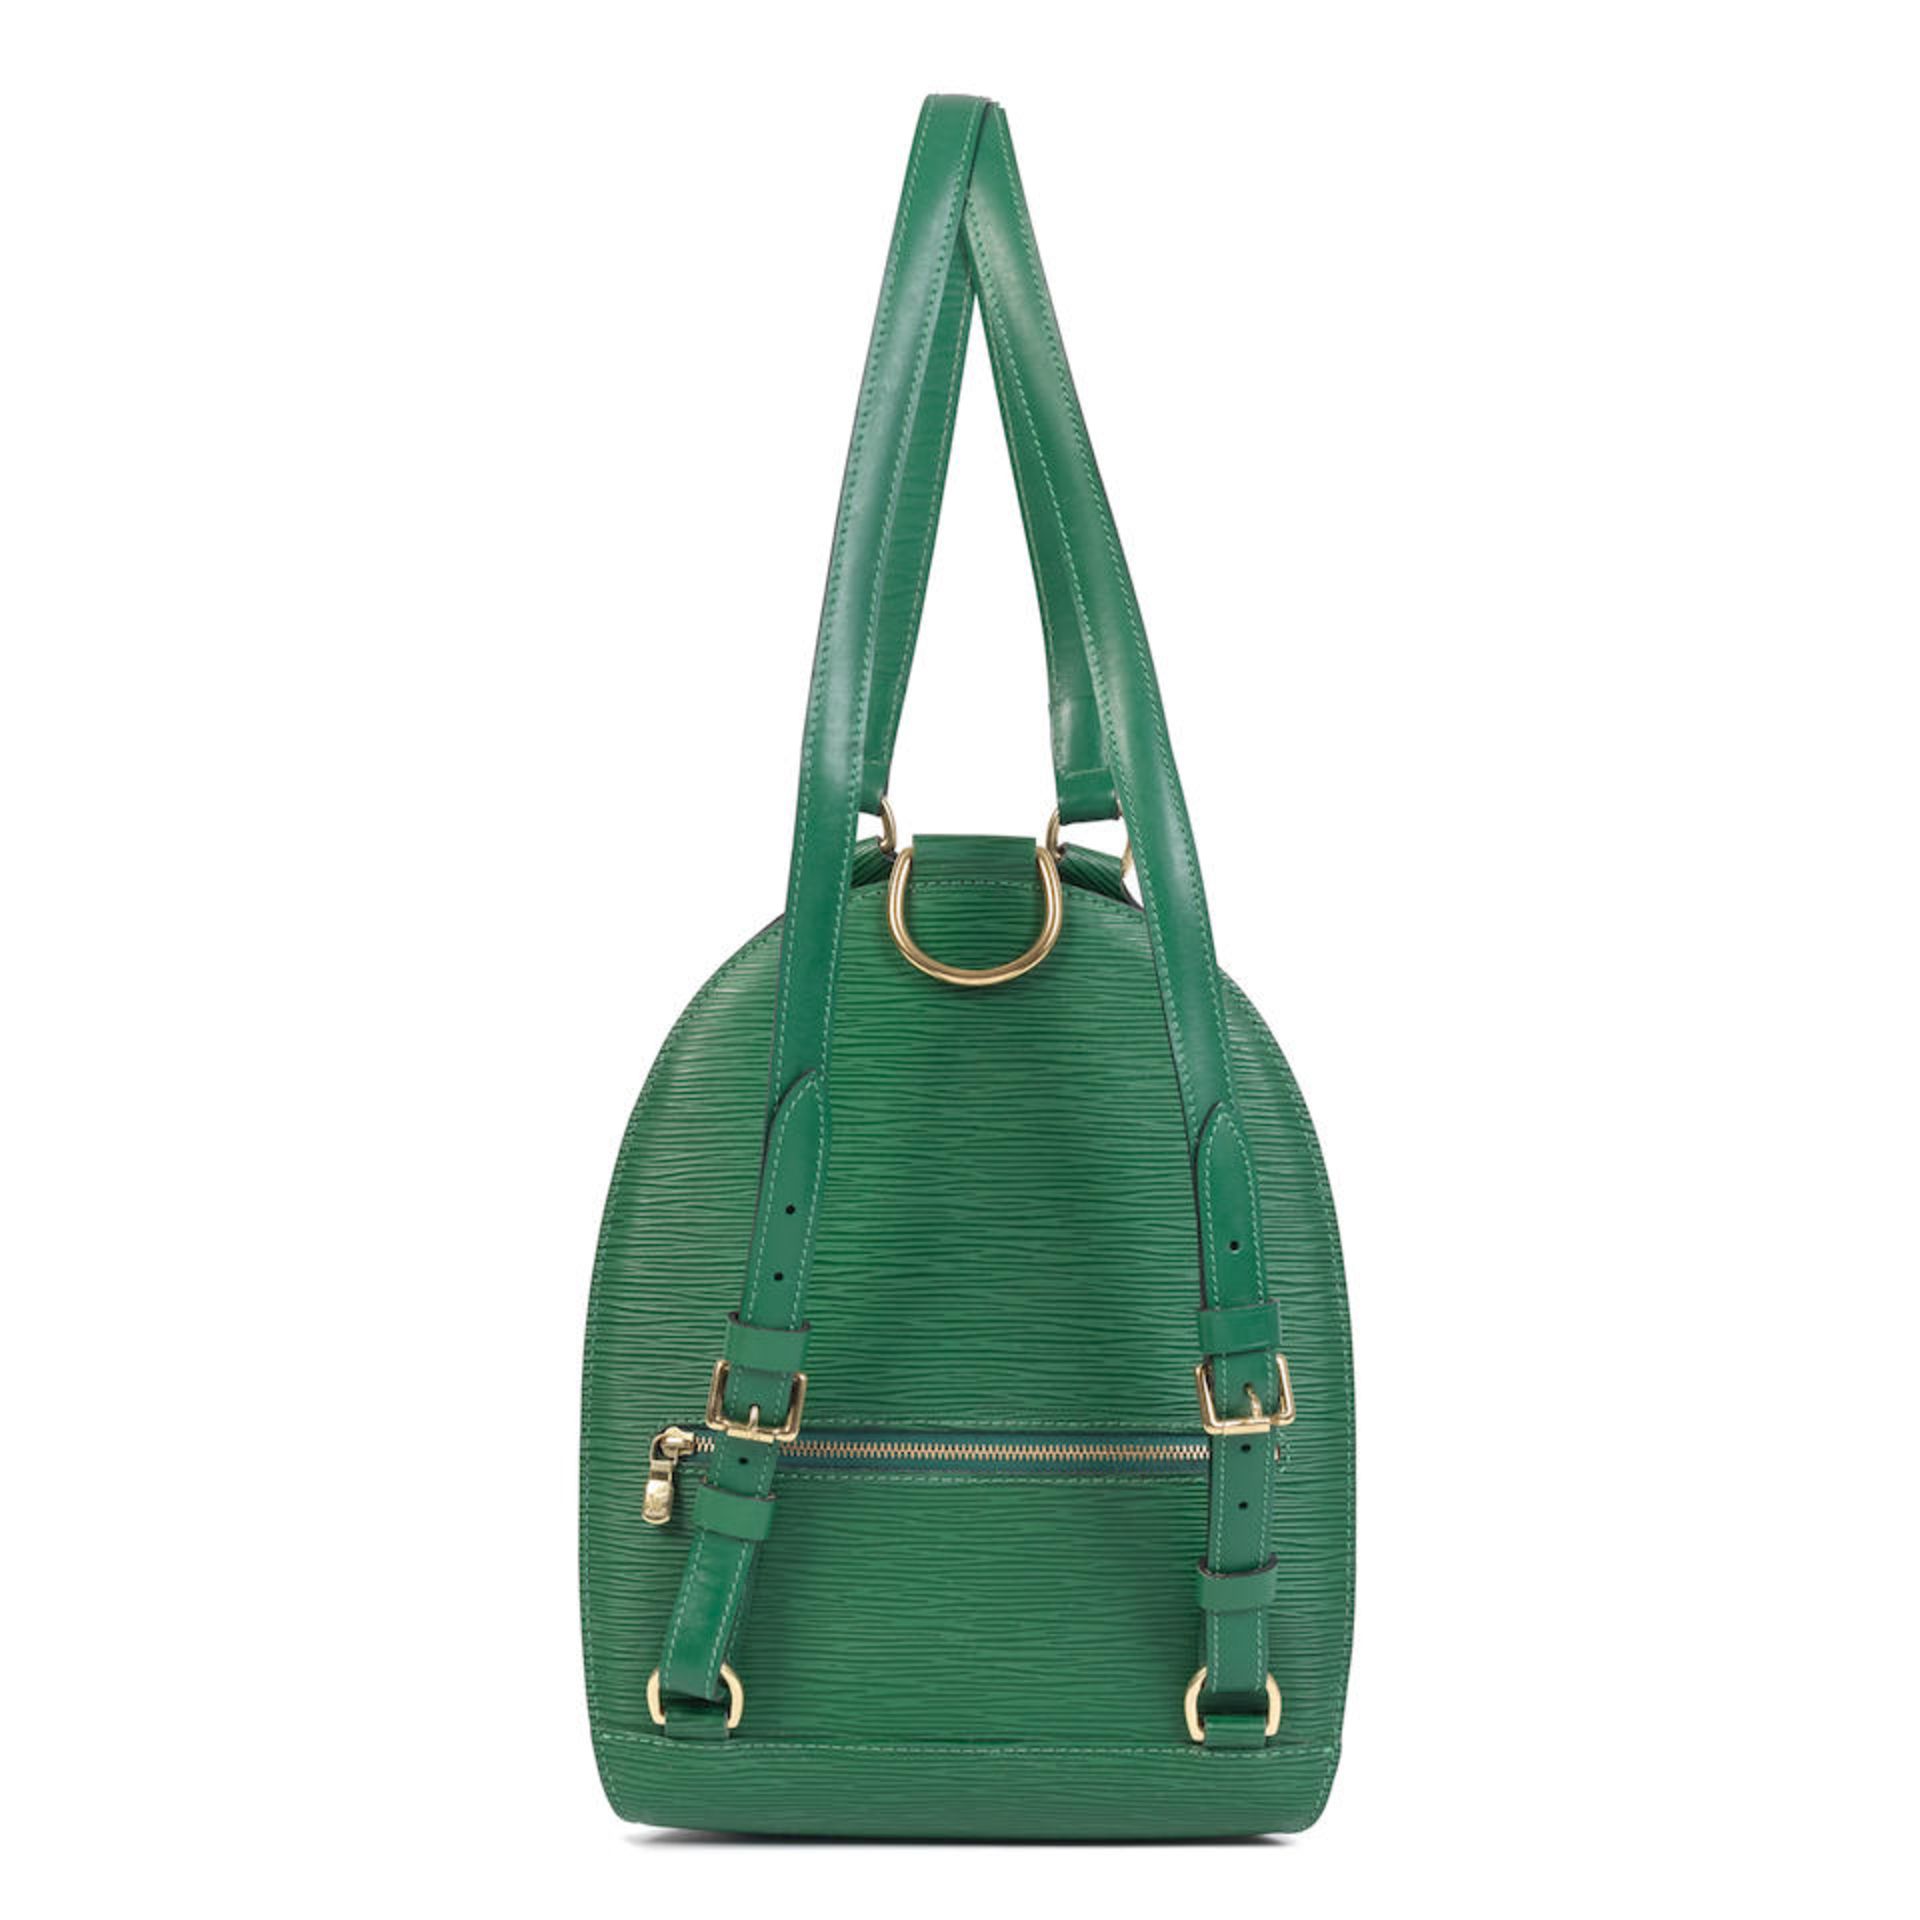 Louis Vuitton: a Green Epi Leather Mabillon Backpack Late 1990s (adjustable shoulder straps) - Bild 2 aus 2